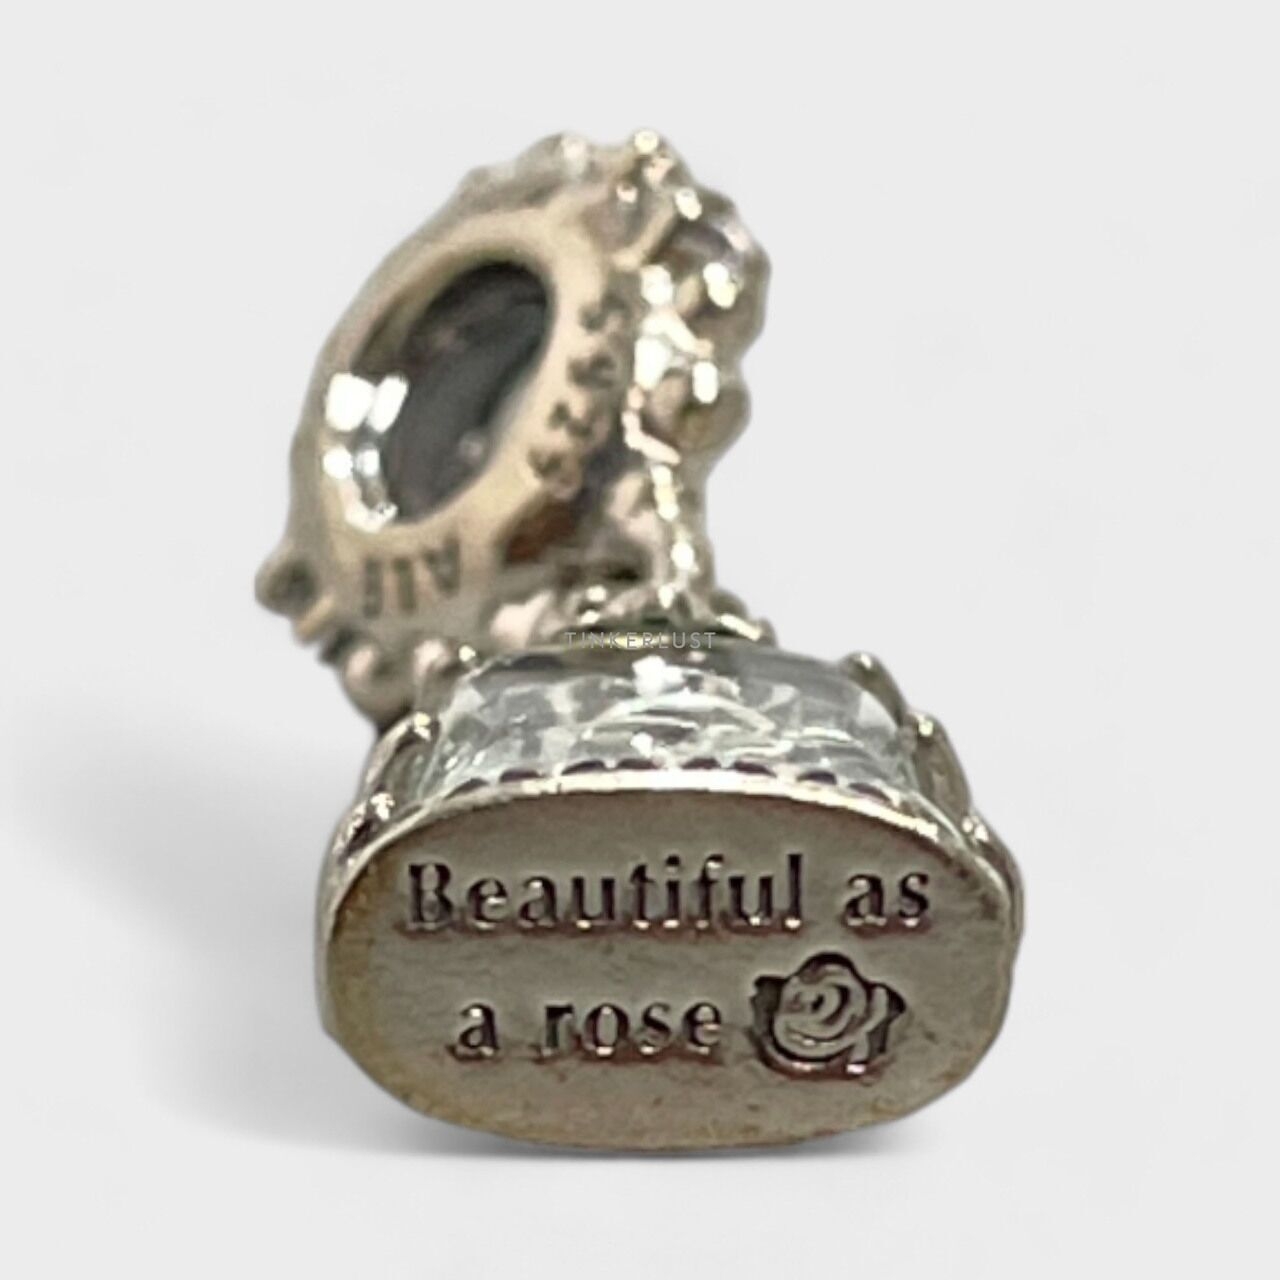 Pandora x Disney Beauty and the Beast Enchanted Rose Dangle Charm Jewelry